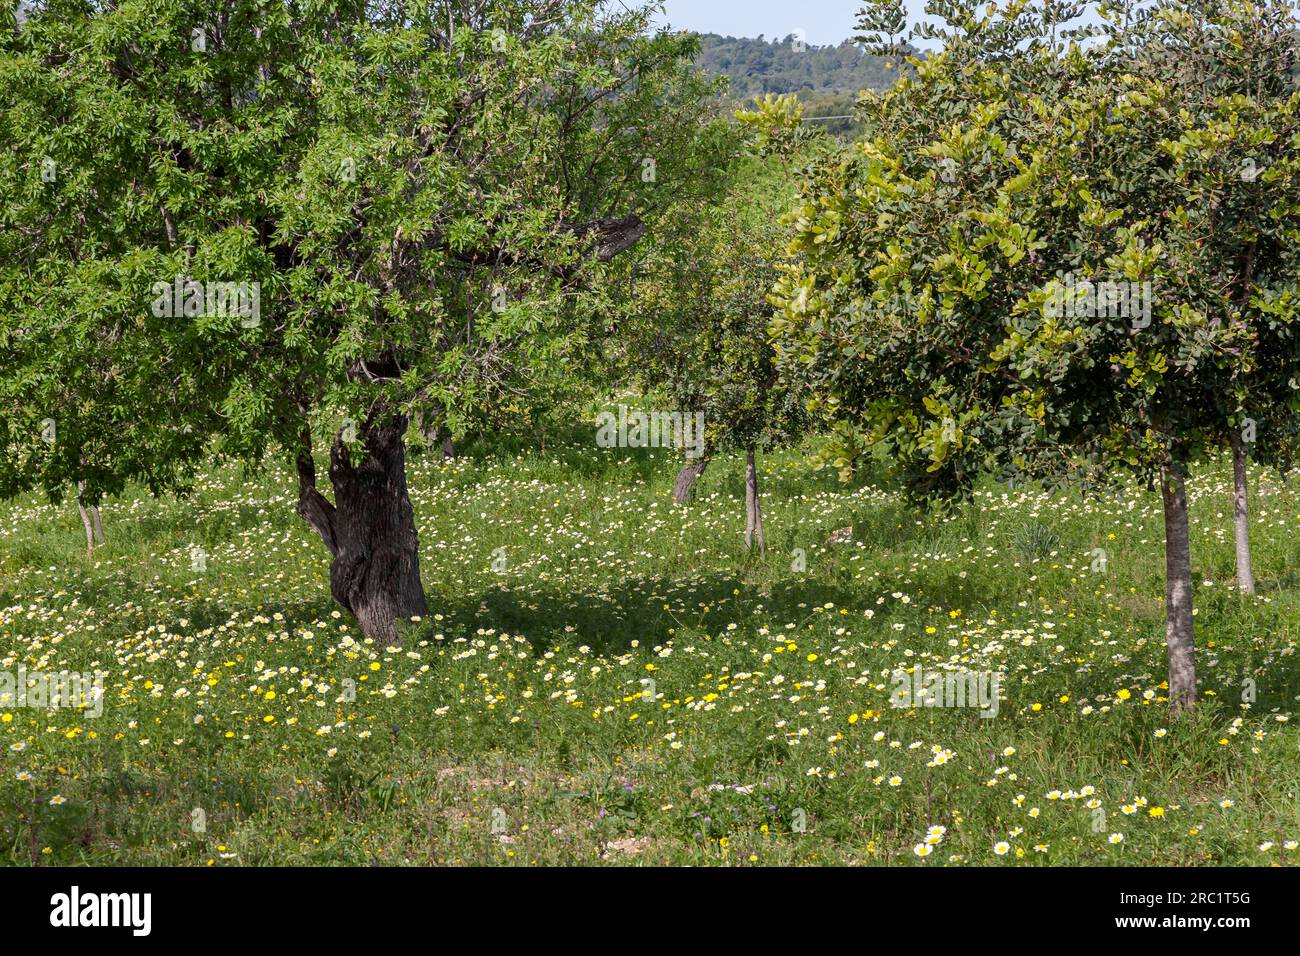 Holm oaks (Quercus ilex) Stock Photo